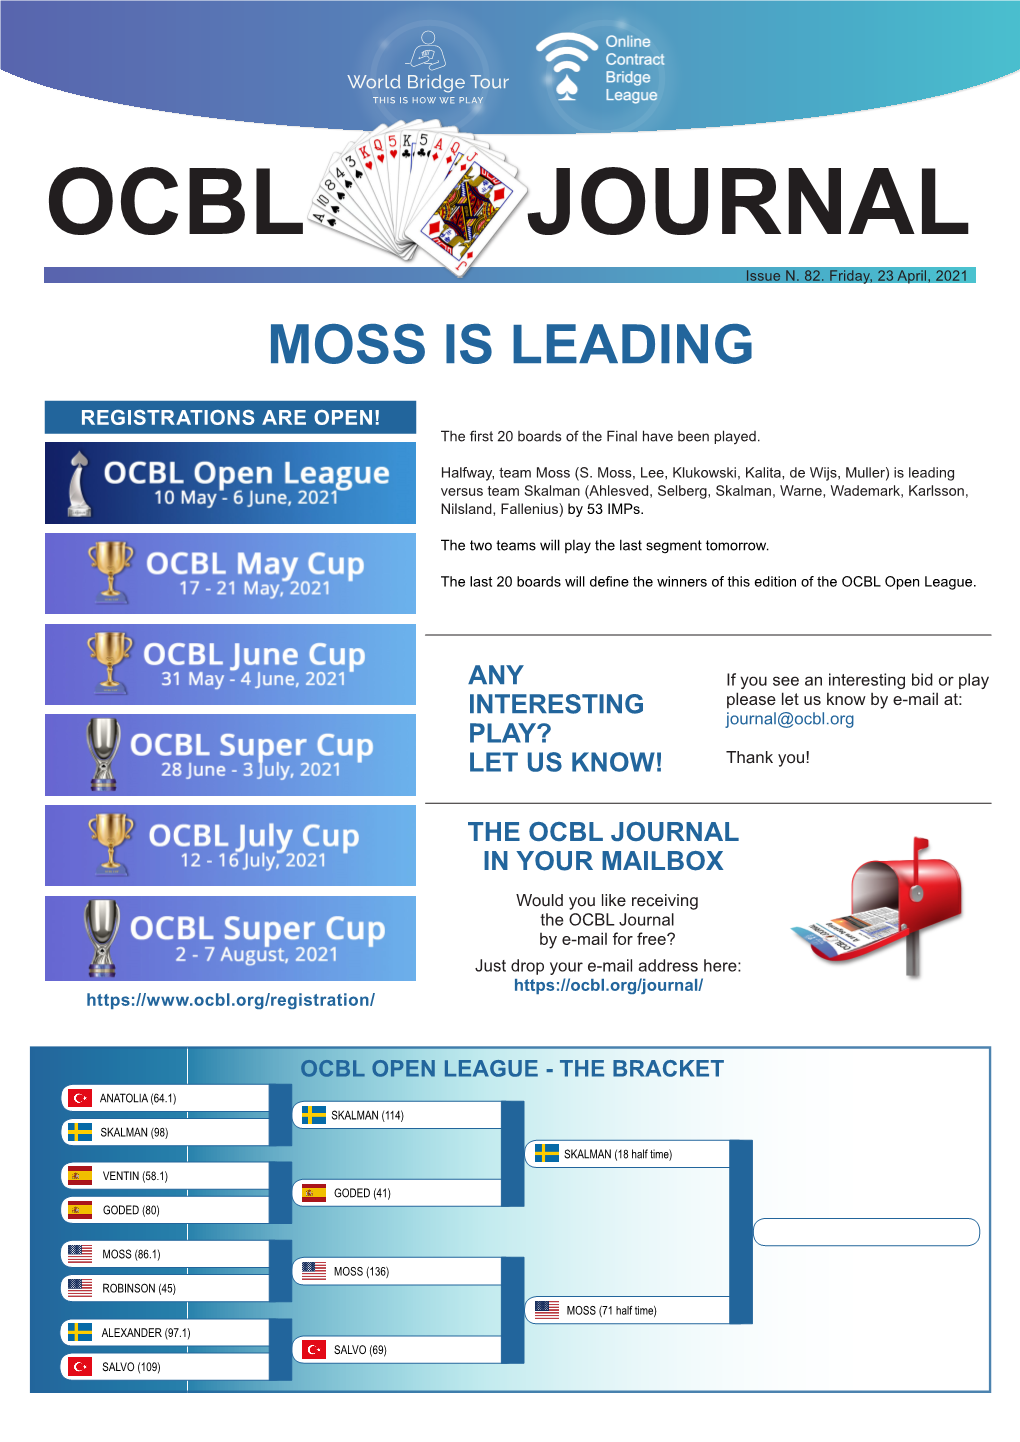 OCBL JOURNAL Issue N